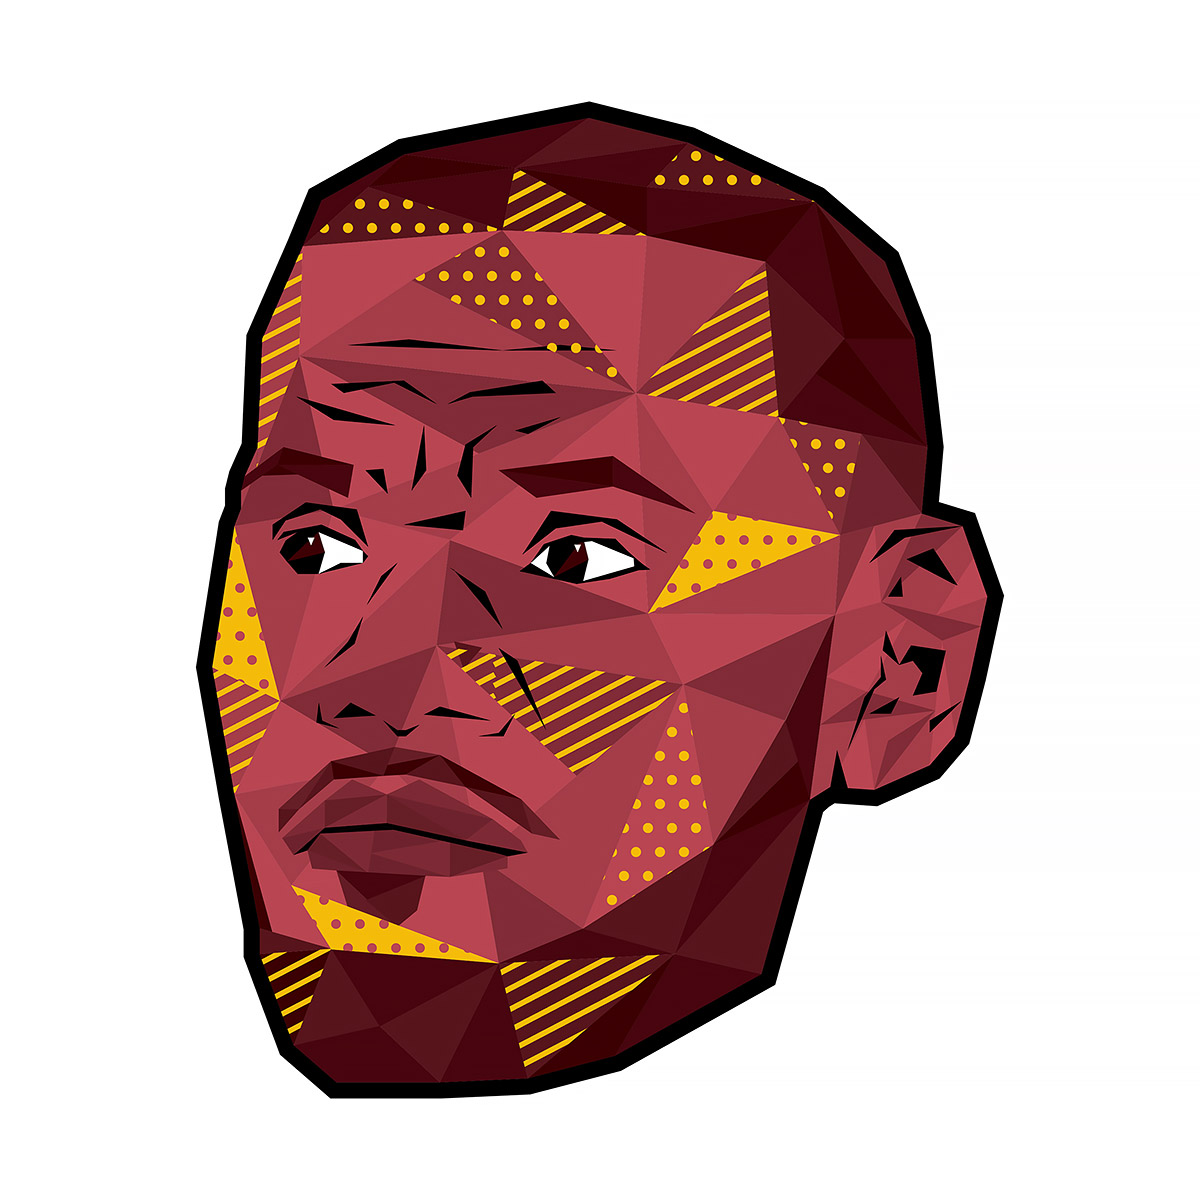 NBA球星POP艺术插画设计